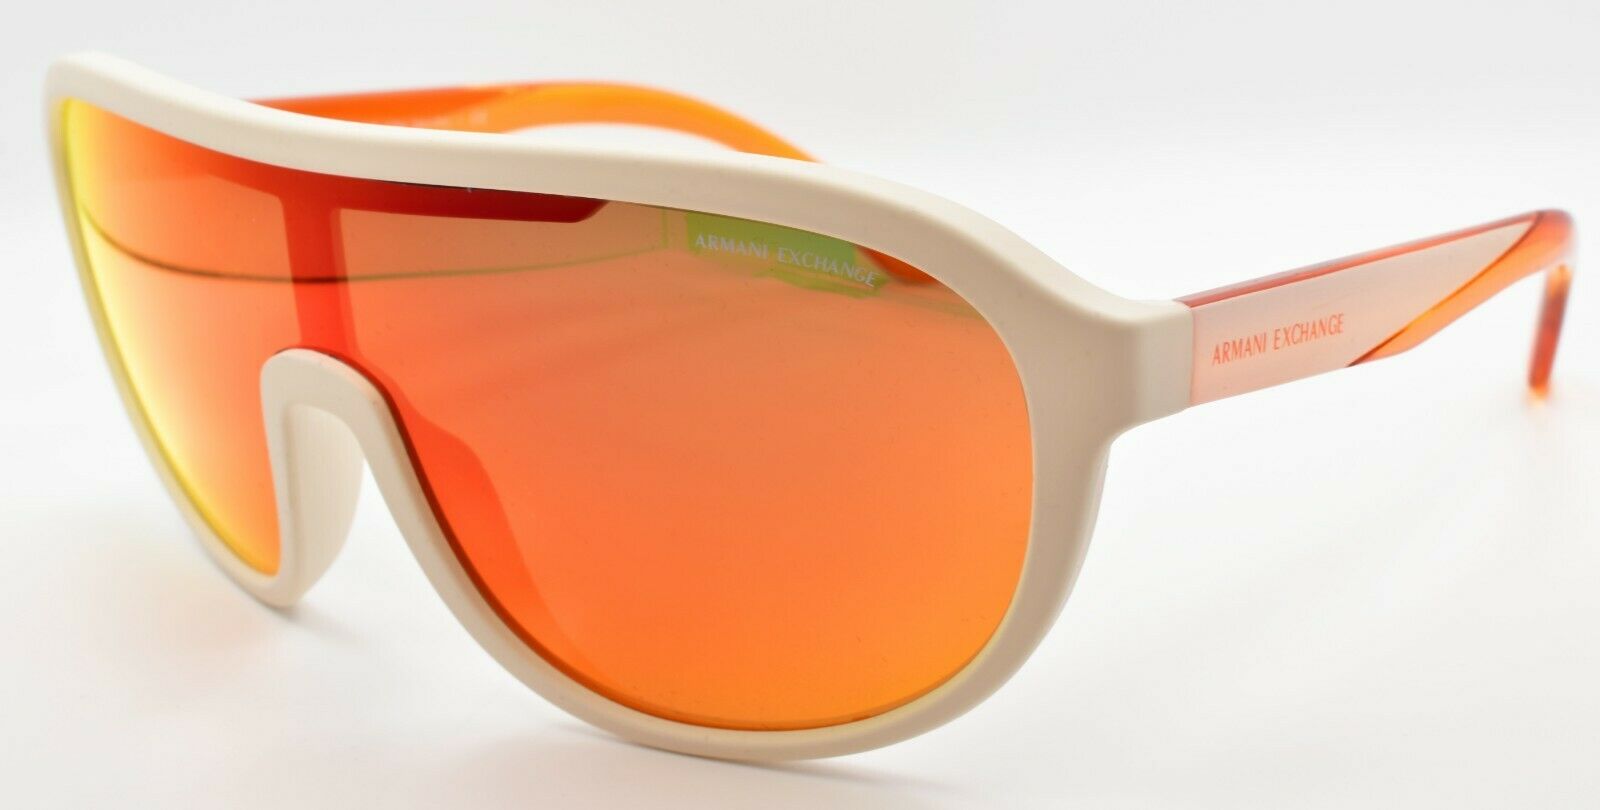 1-Armani Exchange AX4099S 83156Q Shield Sunglasses Matte White / Orange Mirror-7895653196711-IKSpecs